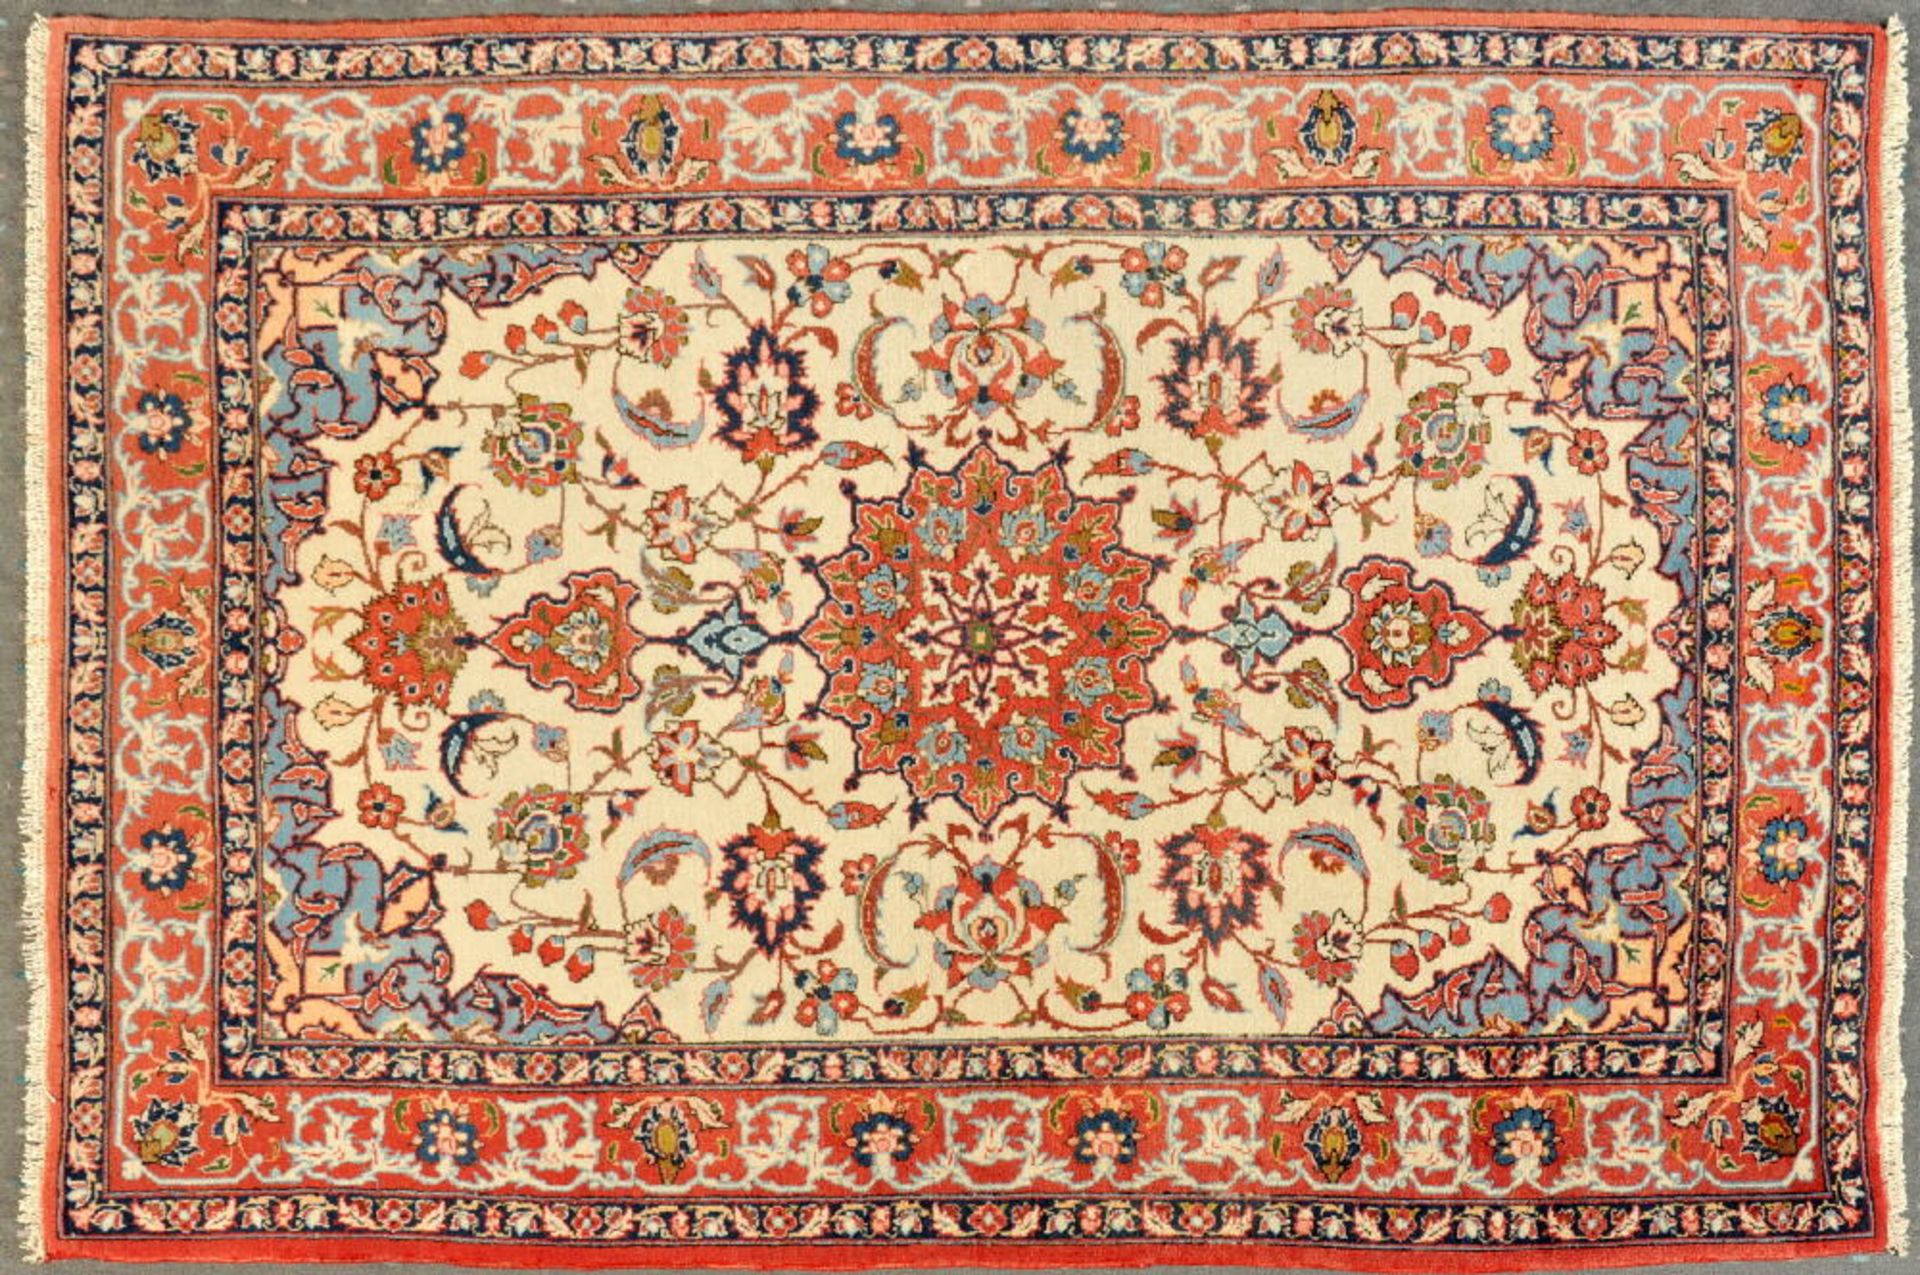 Isfahan, Persien, 103 x 152 cmälter, Wolle, feine Knüpfung, hellgrundig, mehrfarb. Mittelstück,